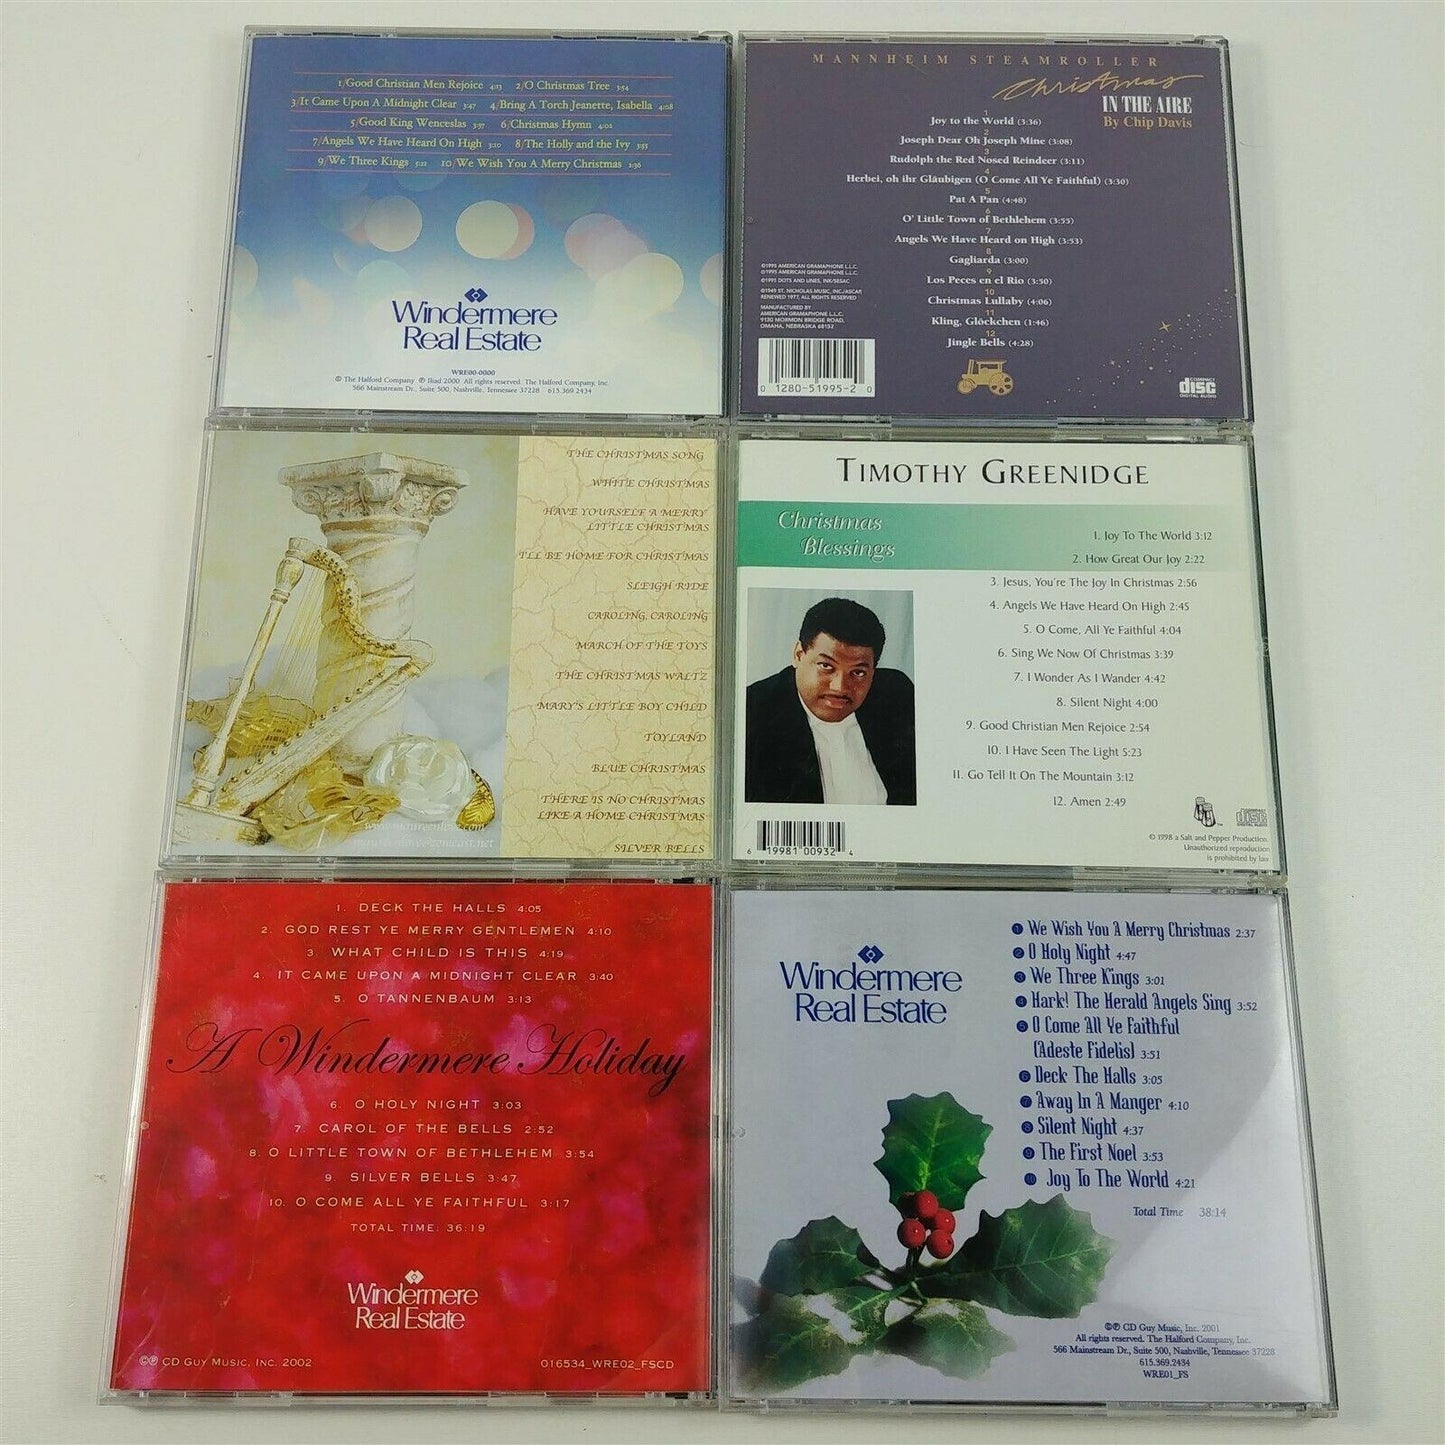 Christmas Holiday Music CD Lot Mannheim Steamroller, Maureen Love, Greenidge